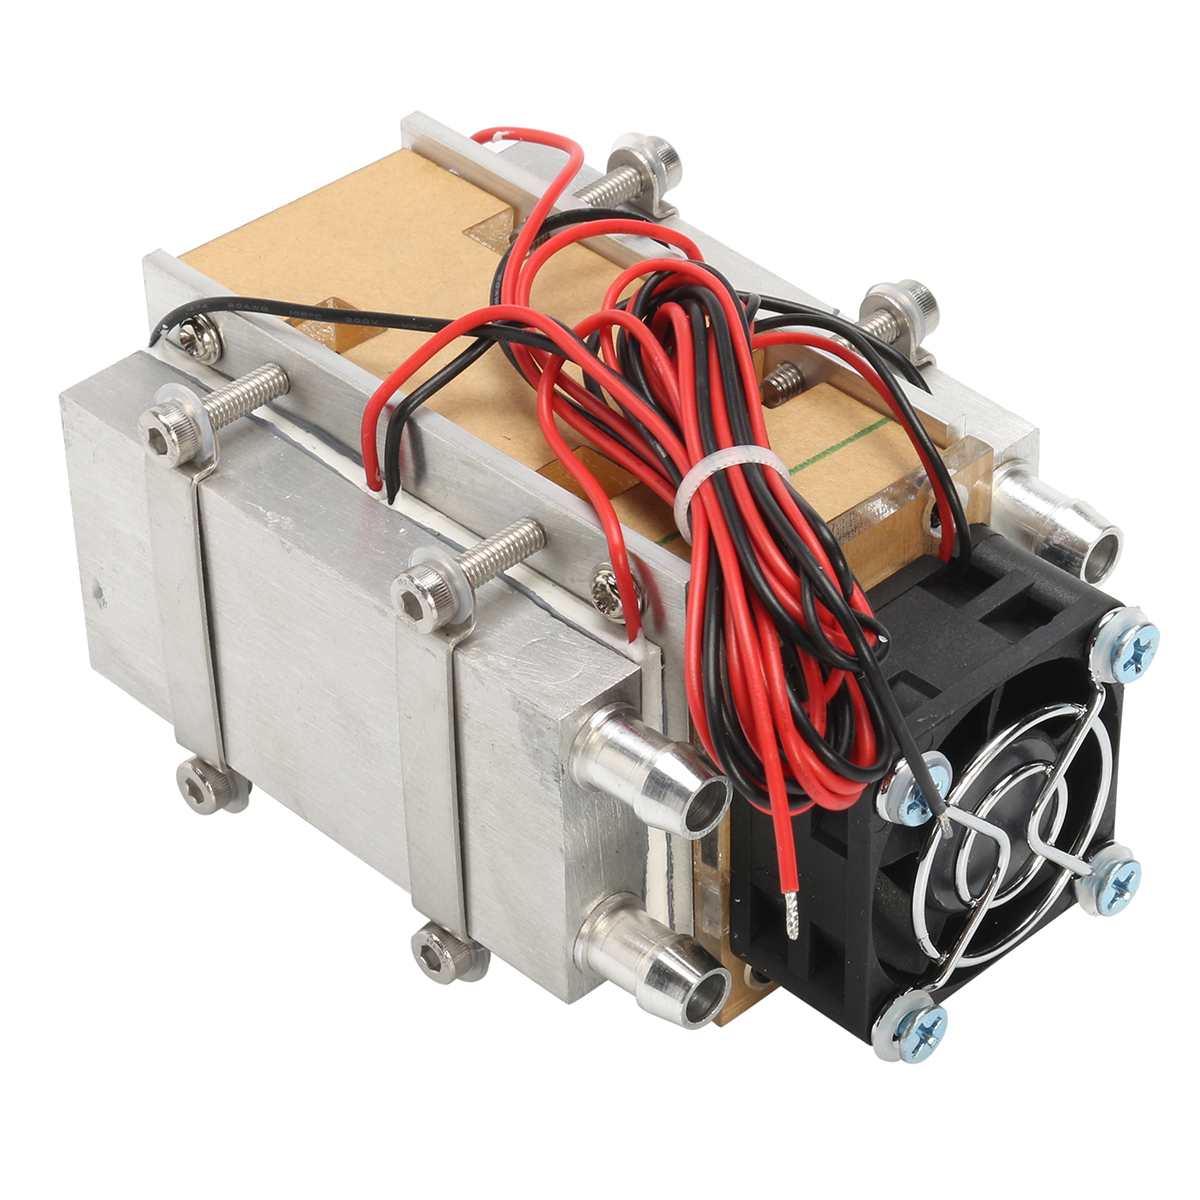 

12V 60W Thermoelectric Peltier Refrigeration Cooling Cooler Fan System Heat Sink Kit